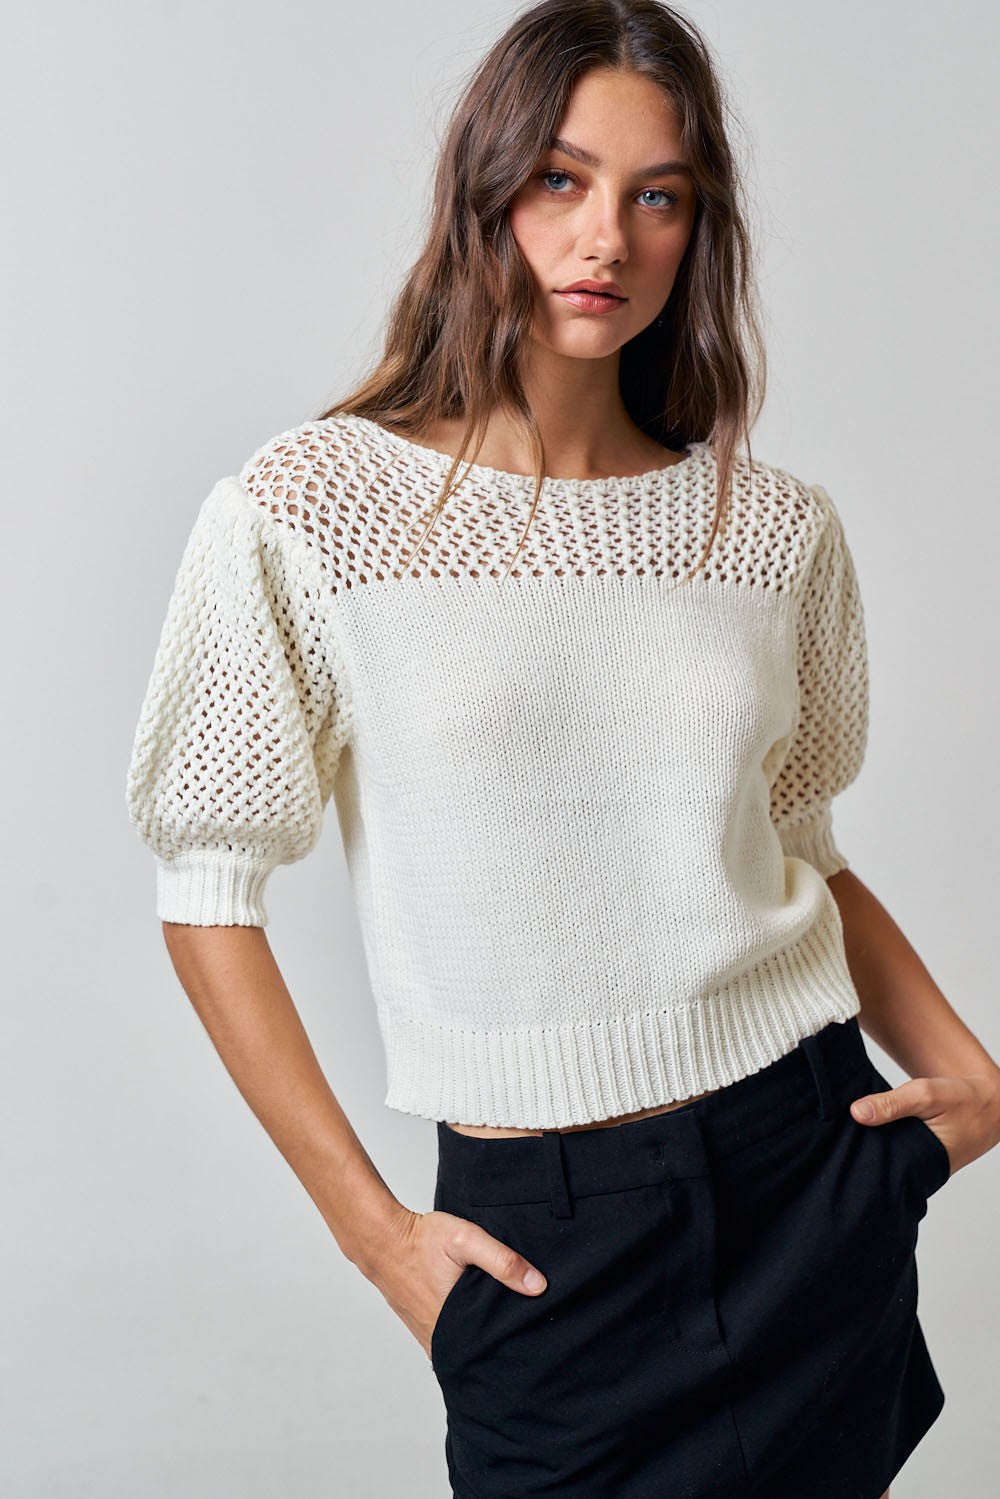 Crochet Puff Sleeve Knit Sweater Top